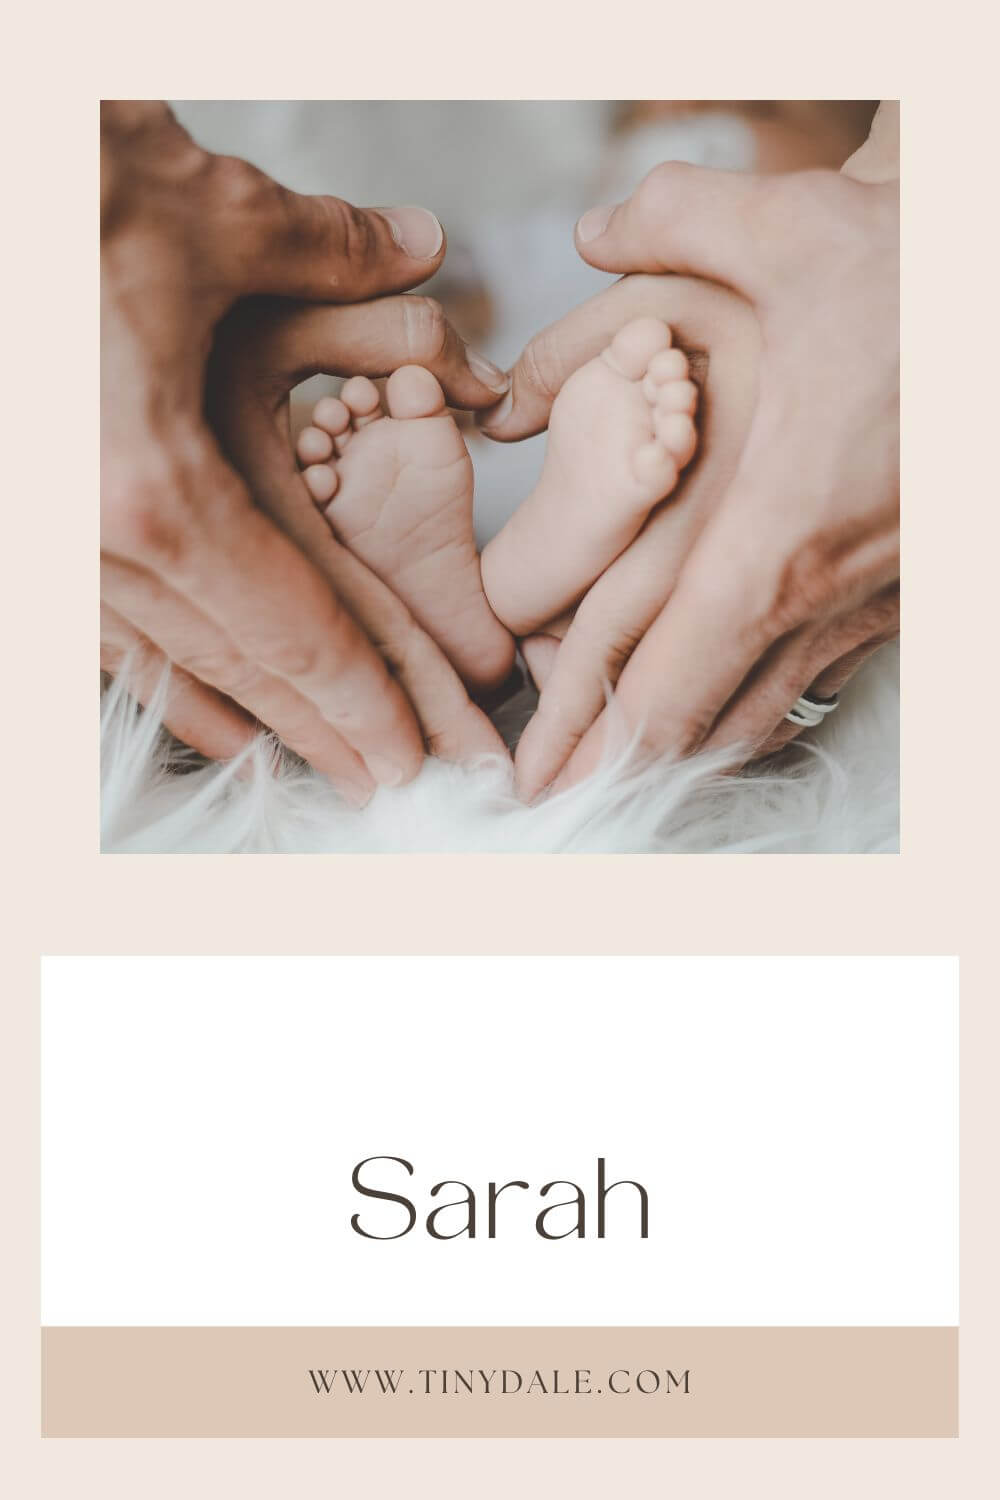 Welcome baby Sarah